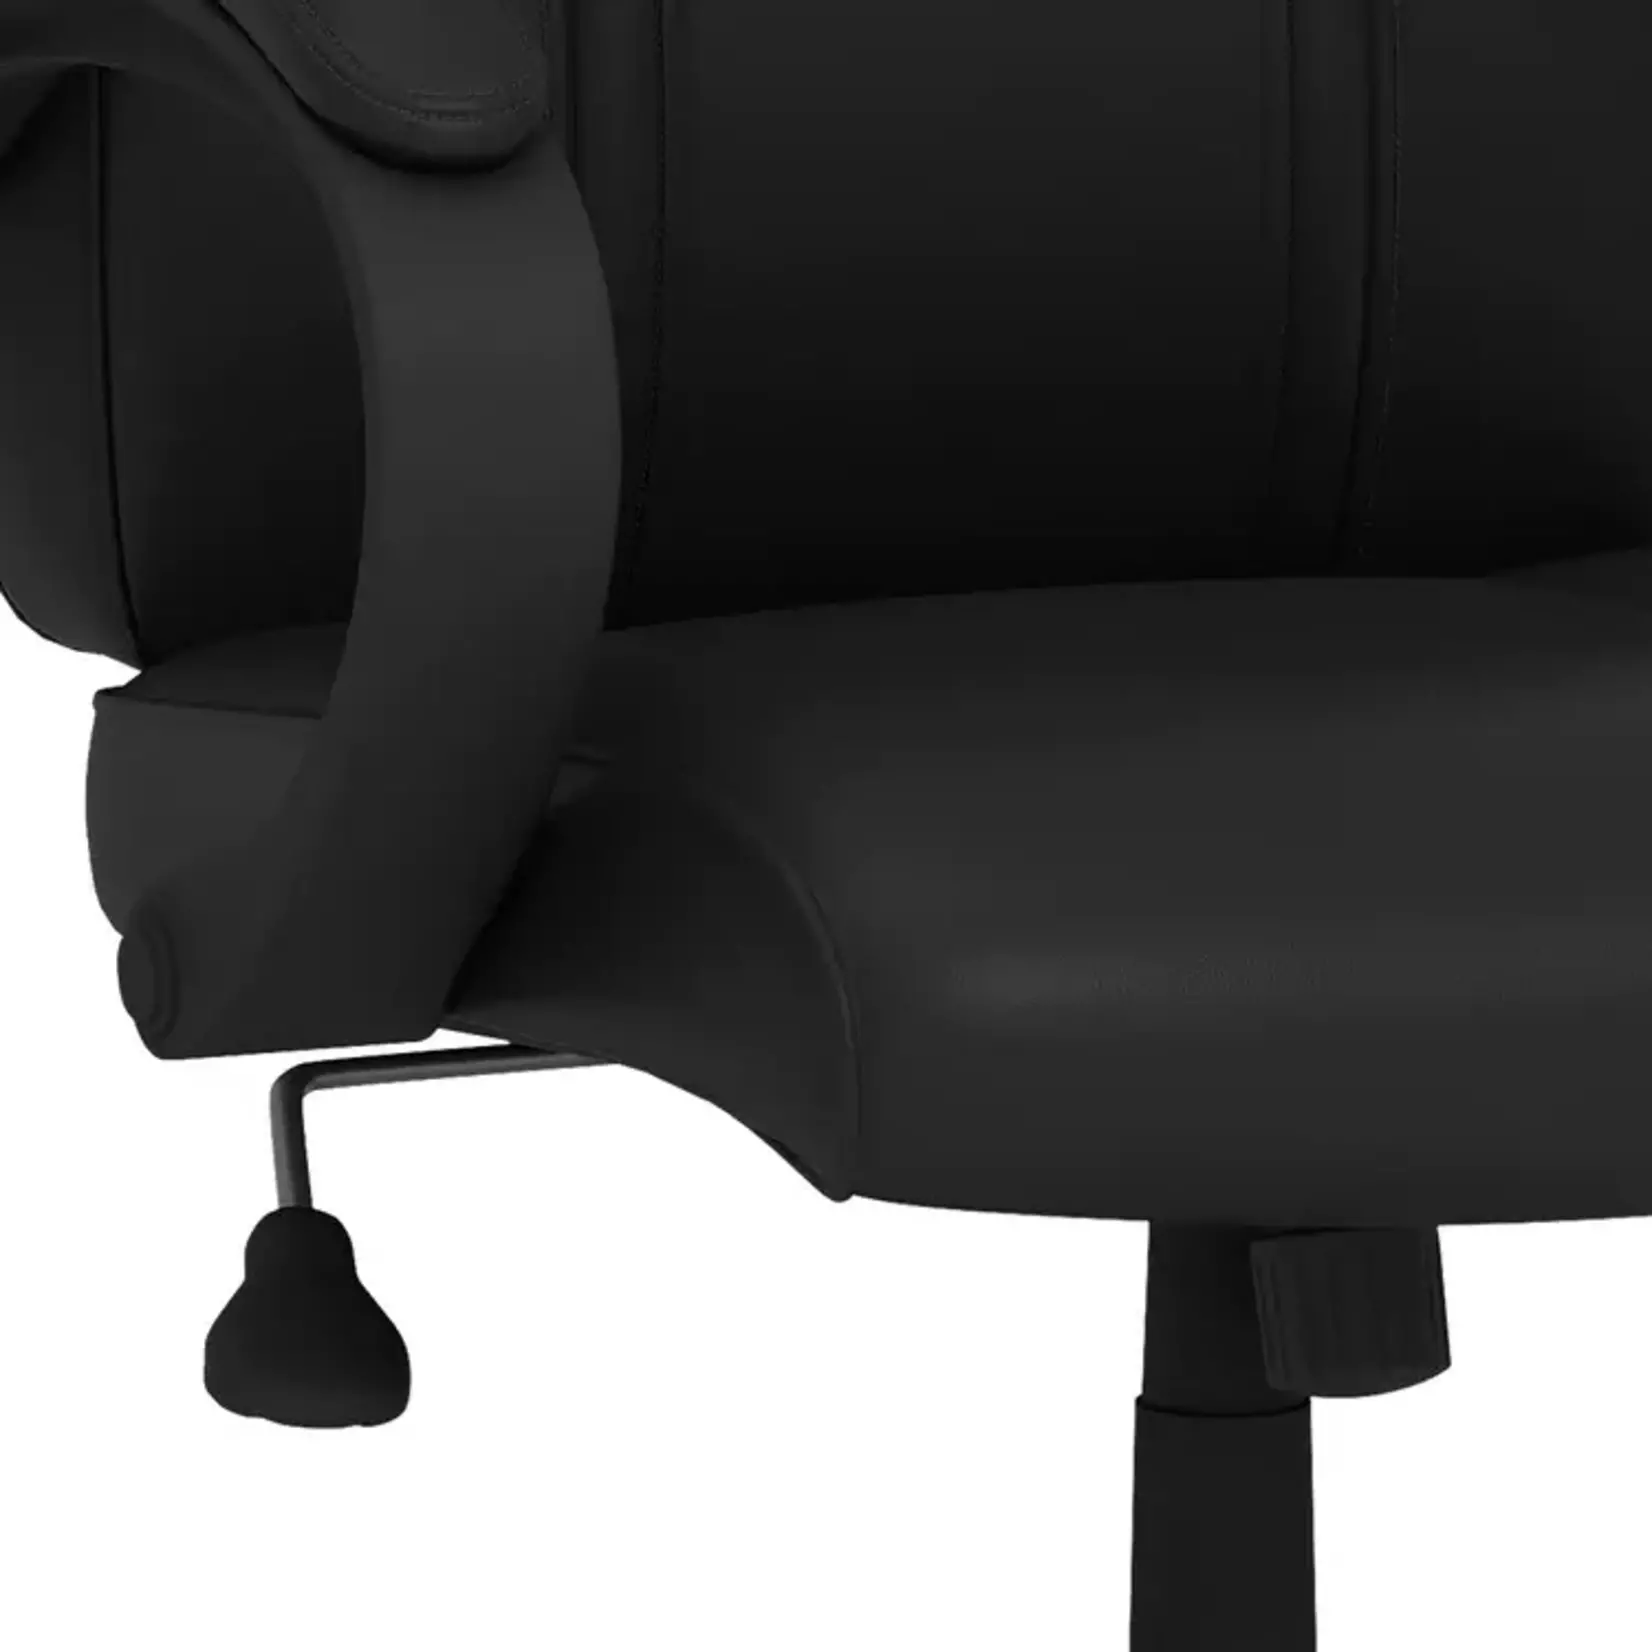 DreamSeat Office Chair 1000